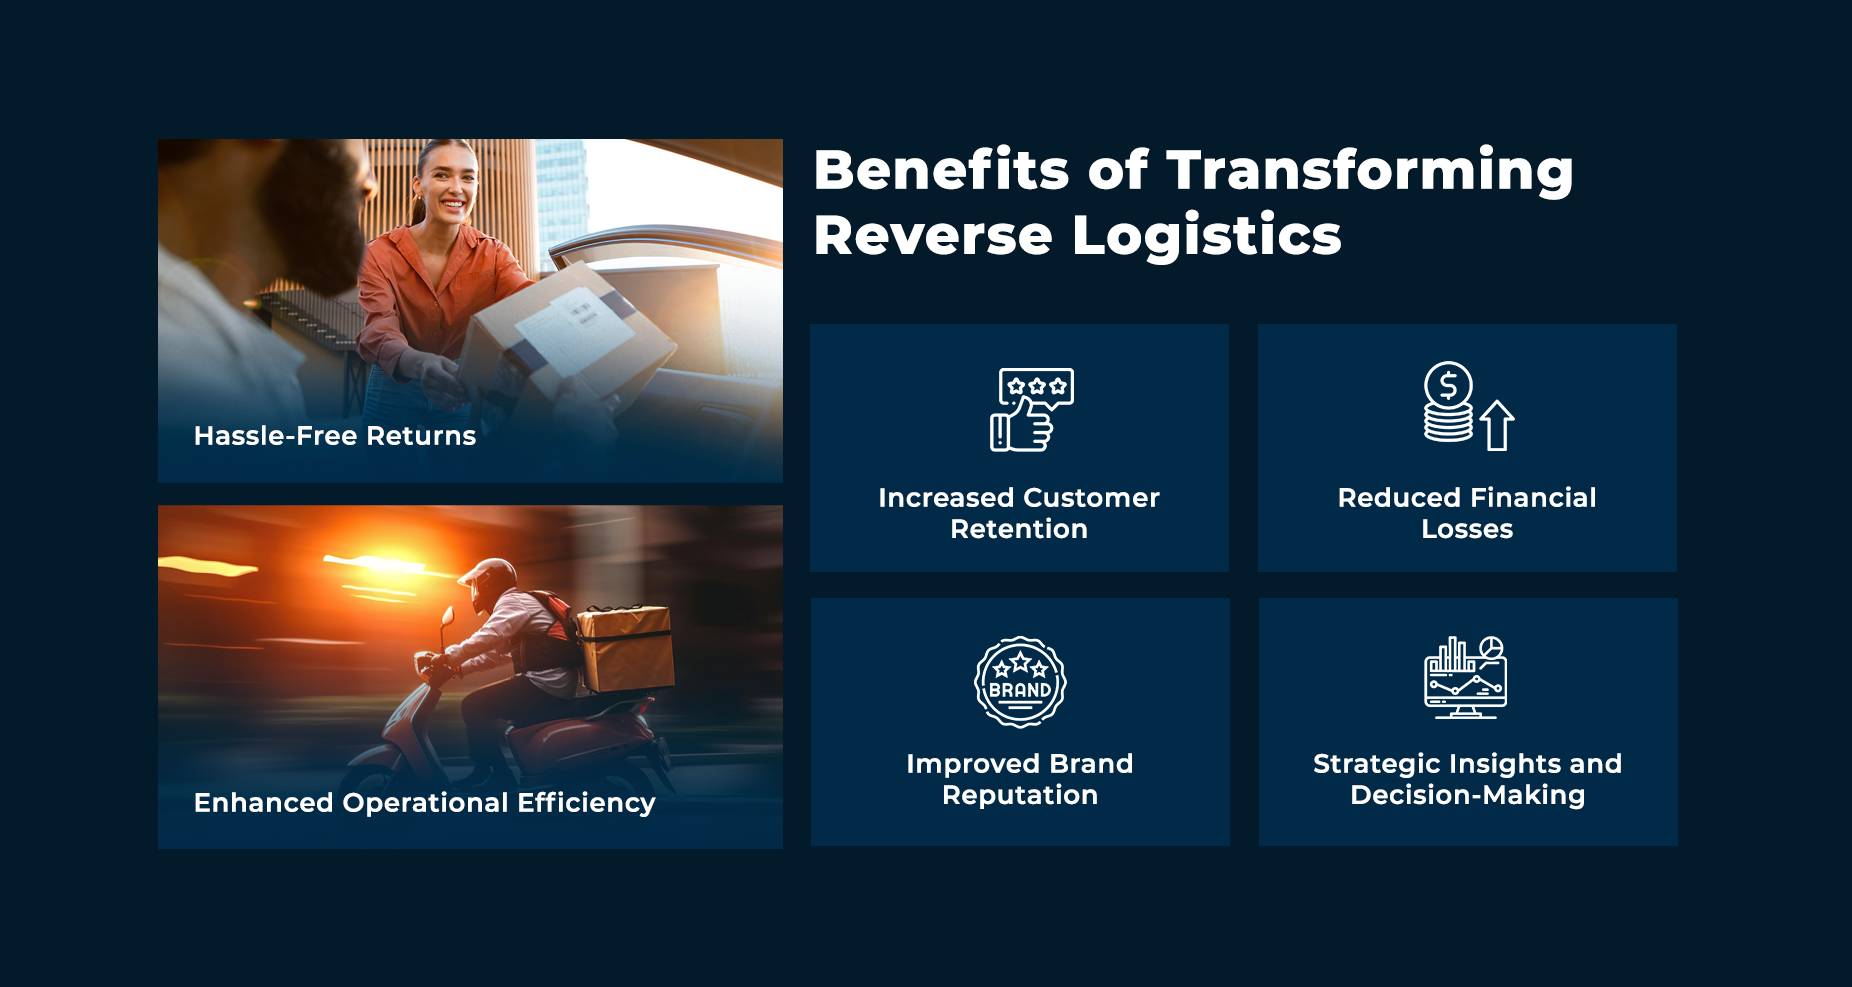 Retailer benefits from transforming reverse logistics